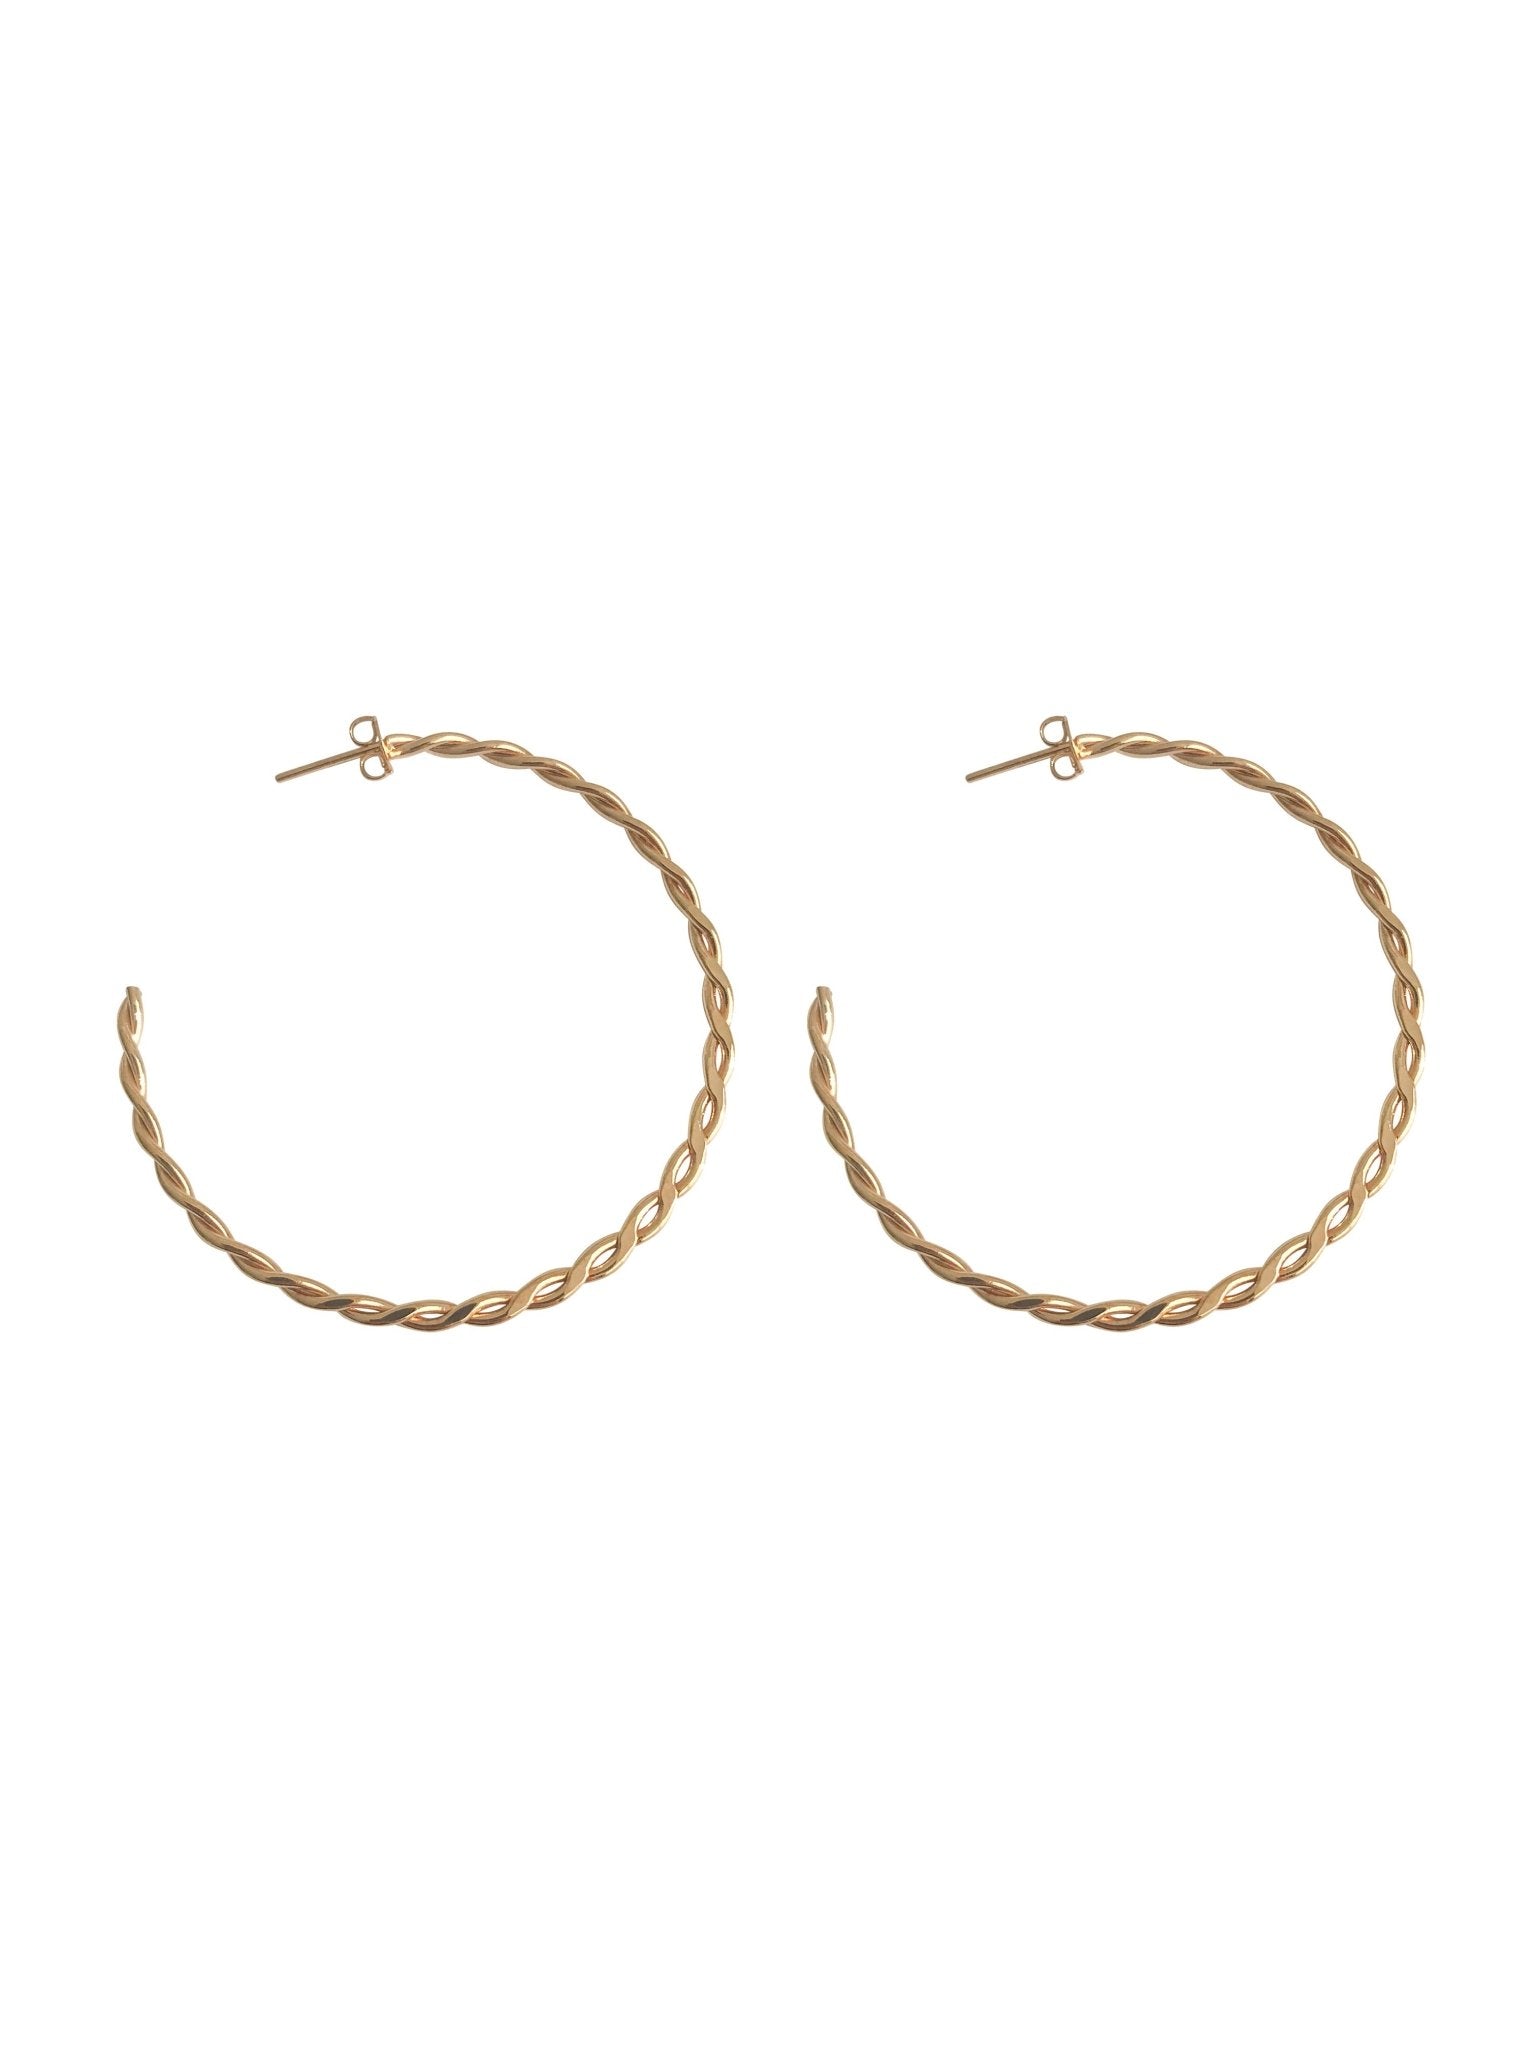 Lara - NOA Jewels - Earrings